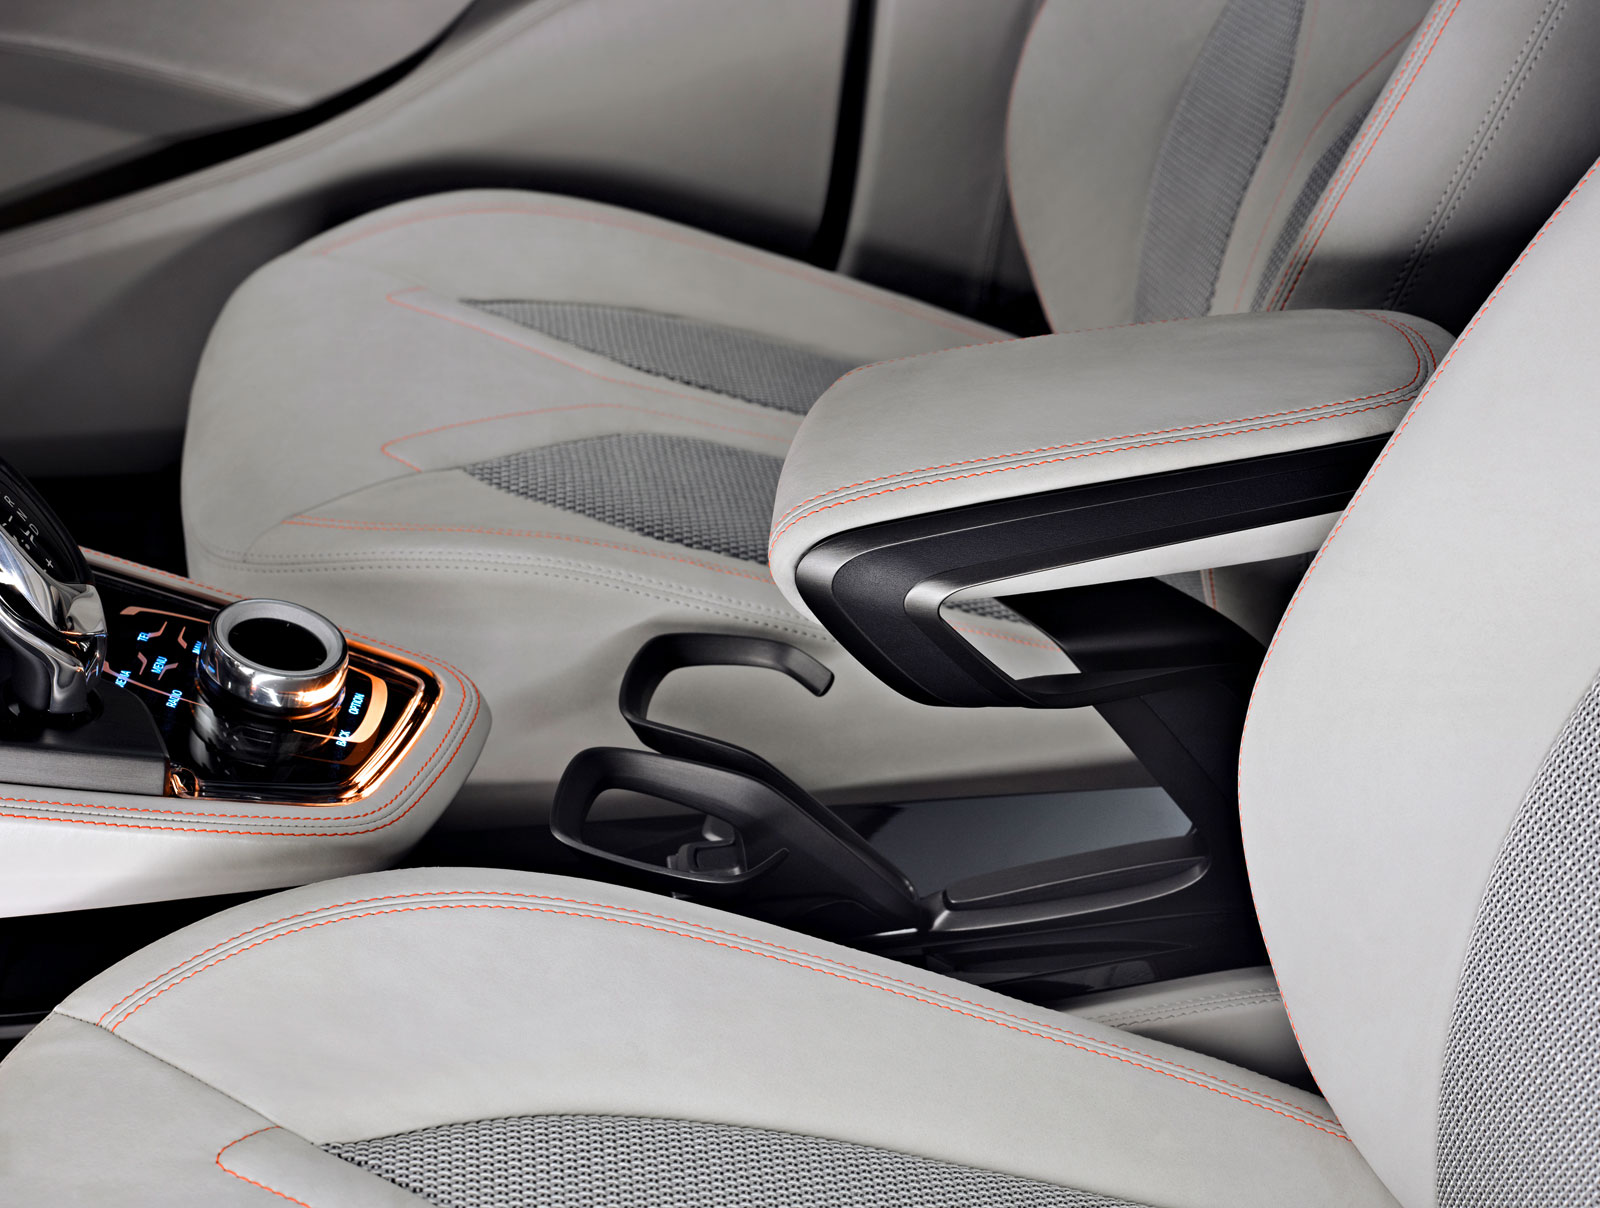 BMW Concept Active Tourer, 2012 - Interior